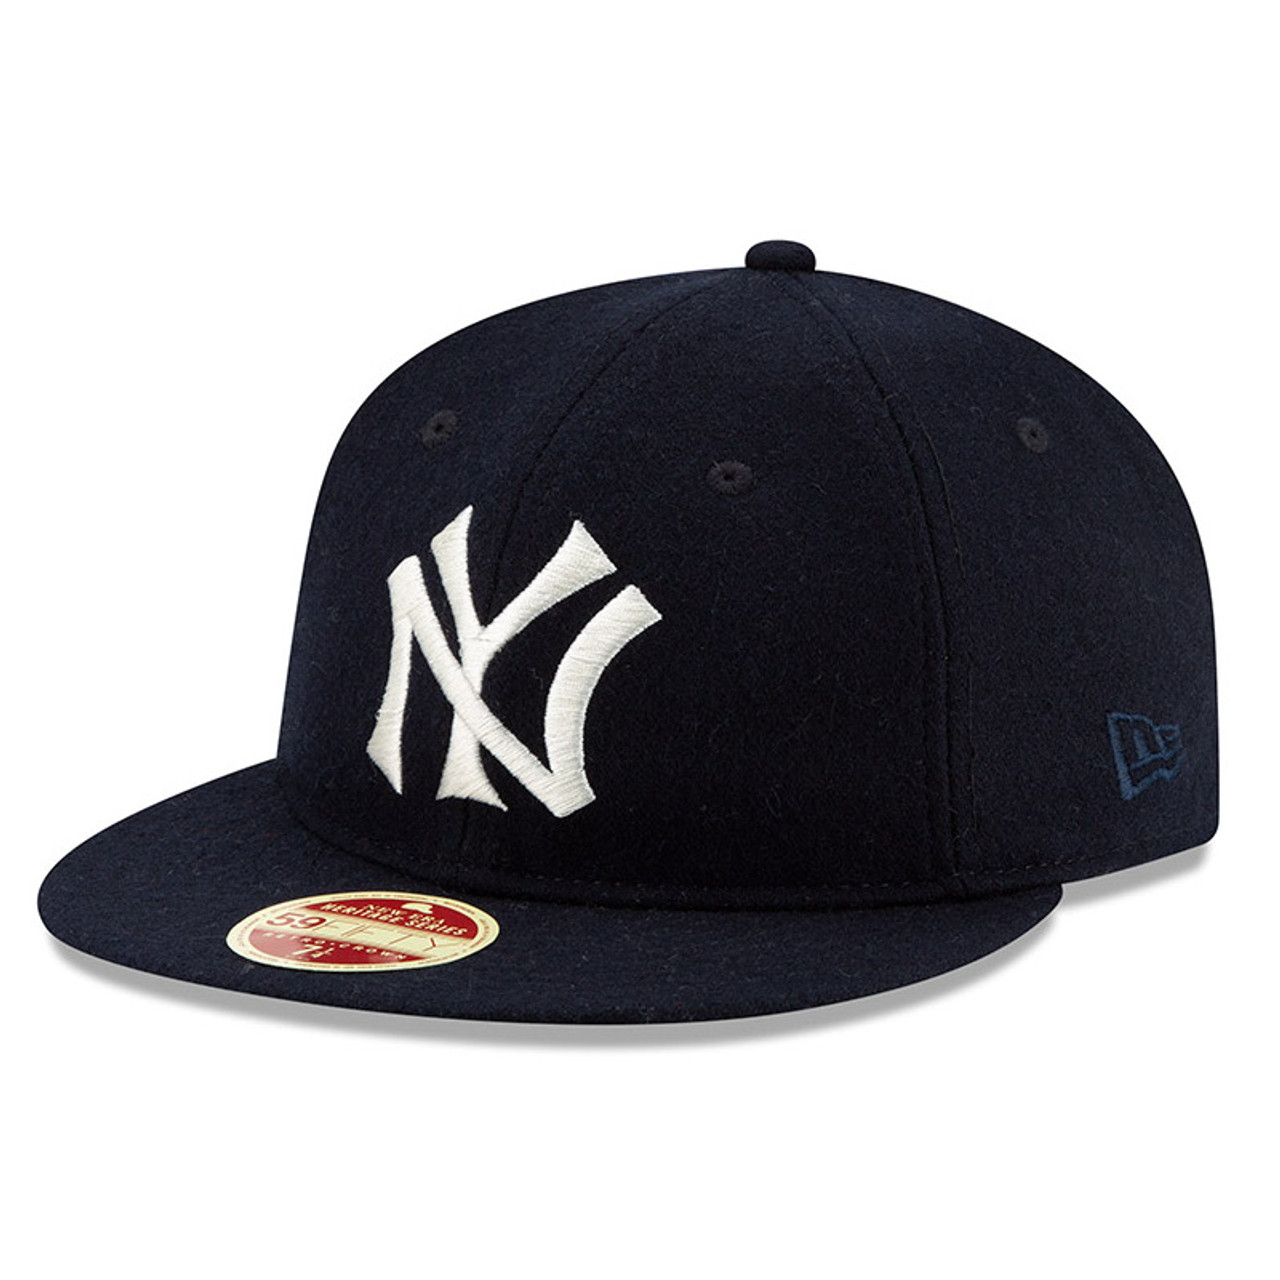 Men's New Era Heritage Series Authentic 1931 New York Yankees